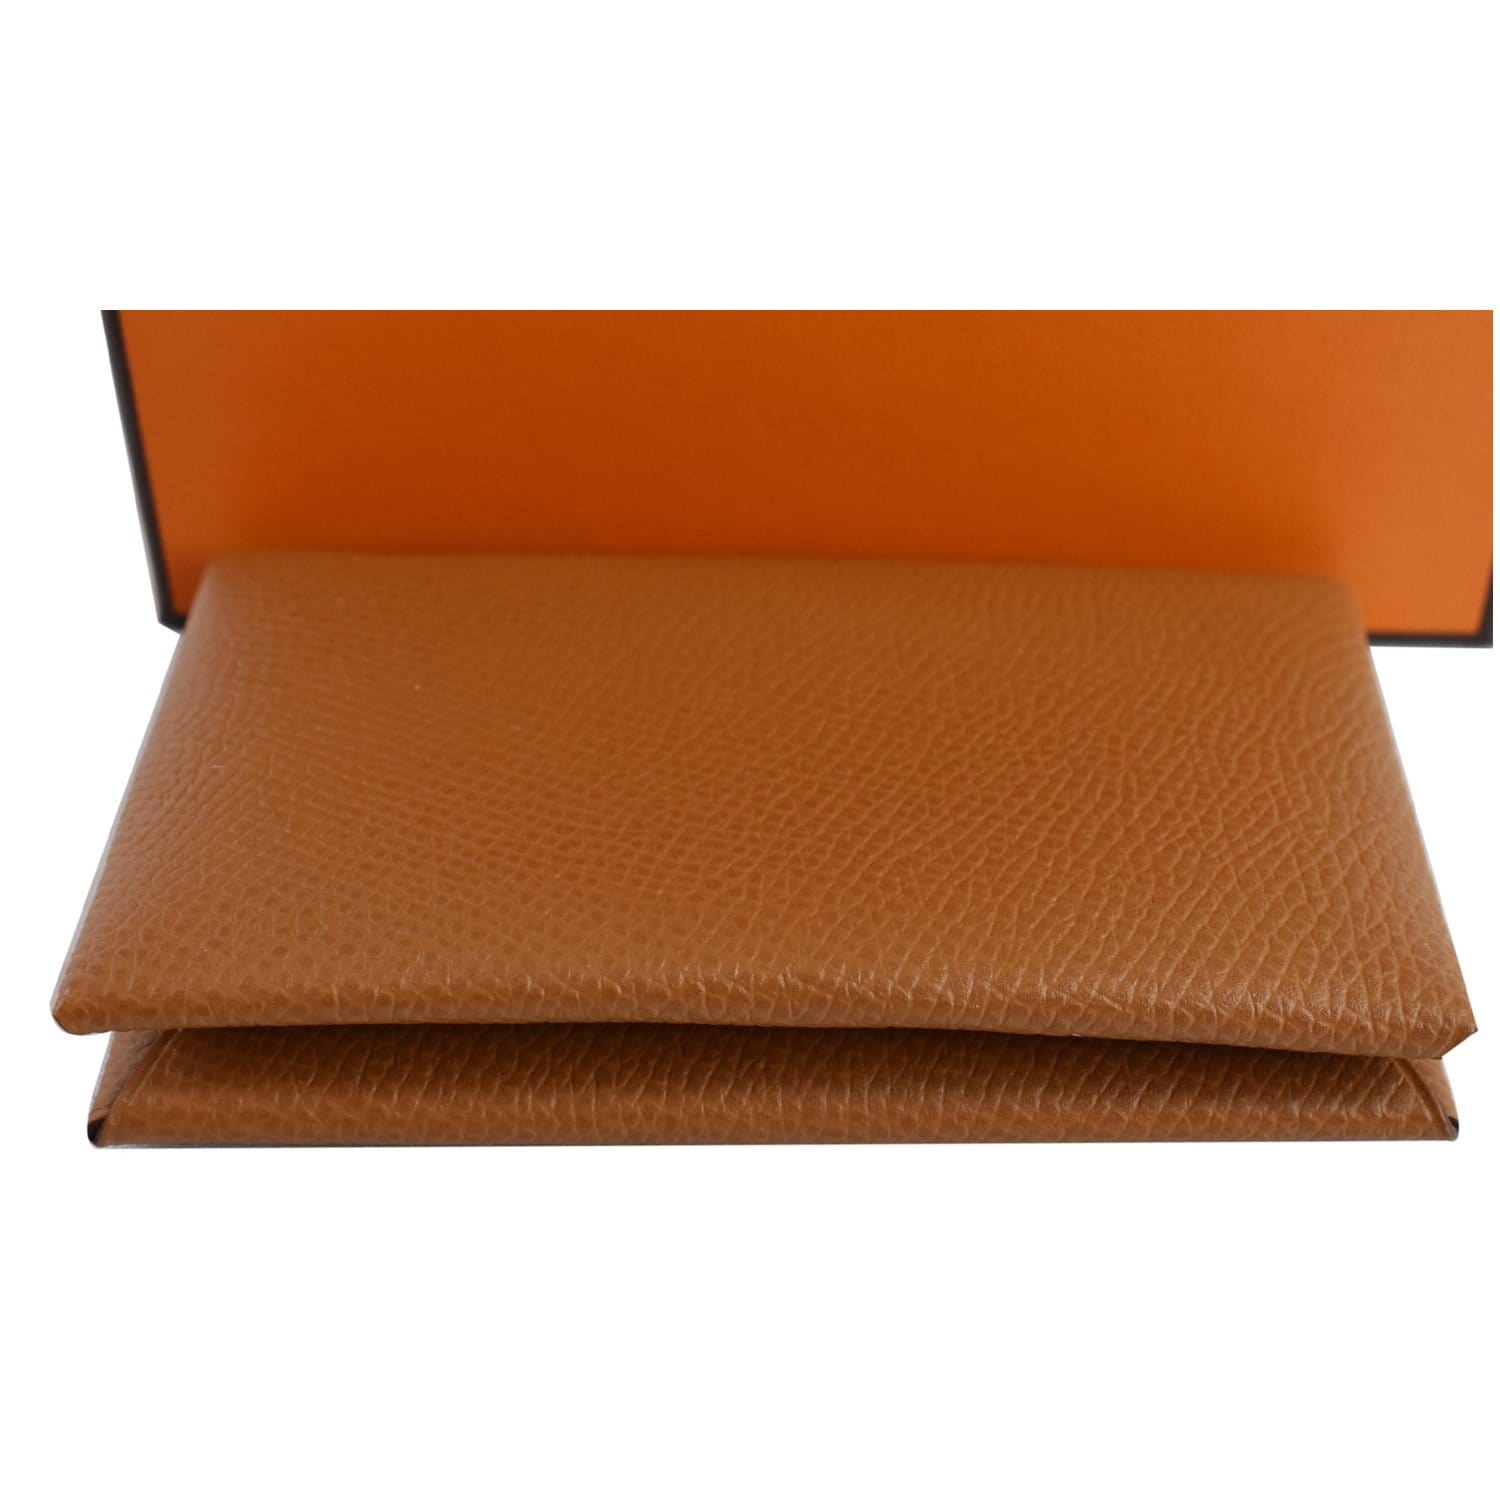 Hermès Orange Epsom Leather Calvi Card Holder